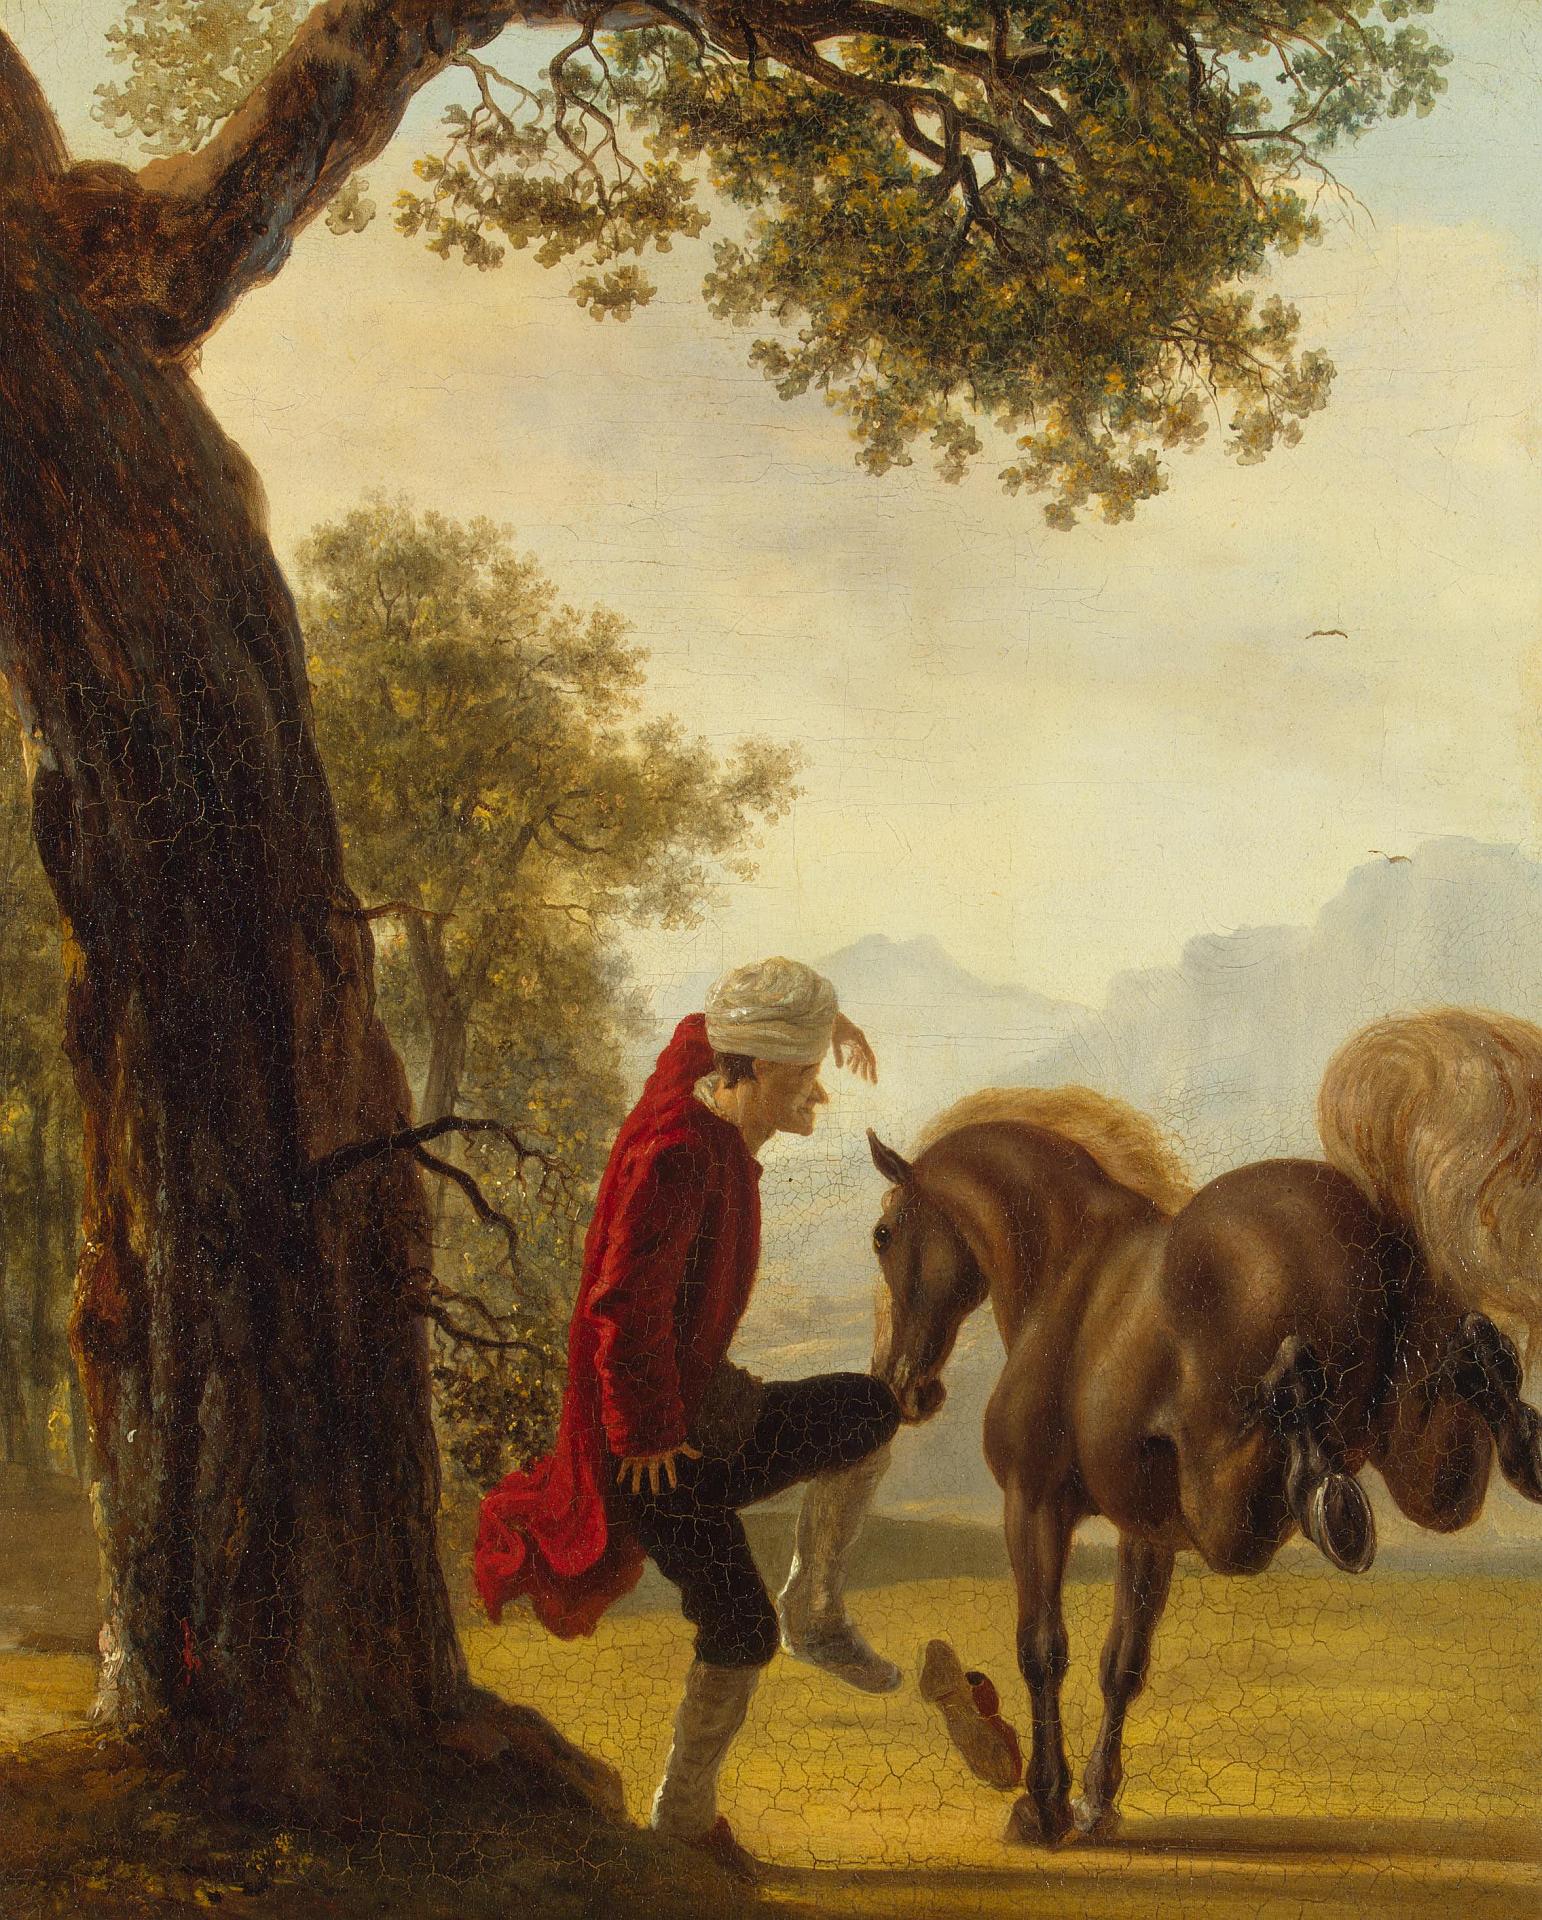 Жан Гюбер. "Вольтер, укрощающий лошадь". Между 1750-1775. Эрмитаж, Санкт-Петербург.